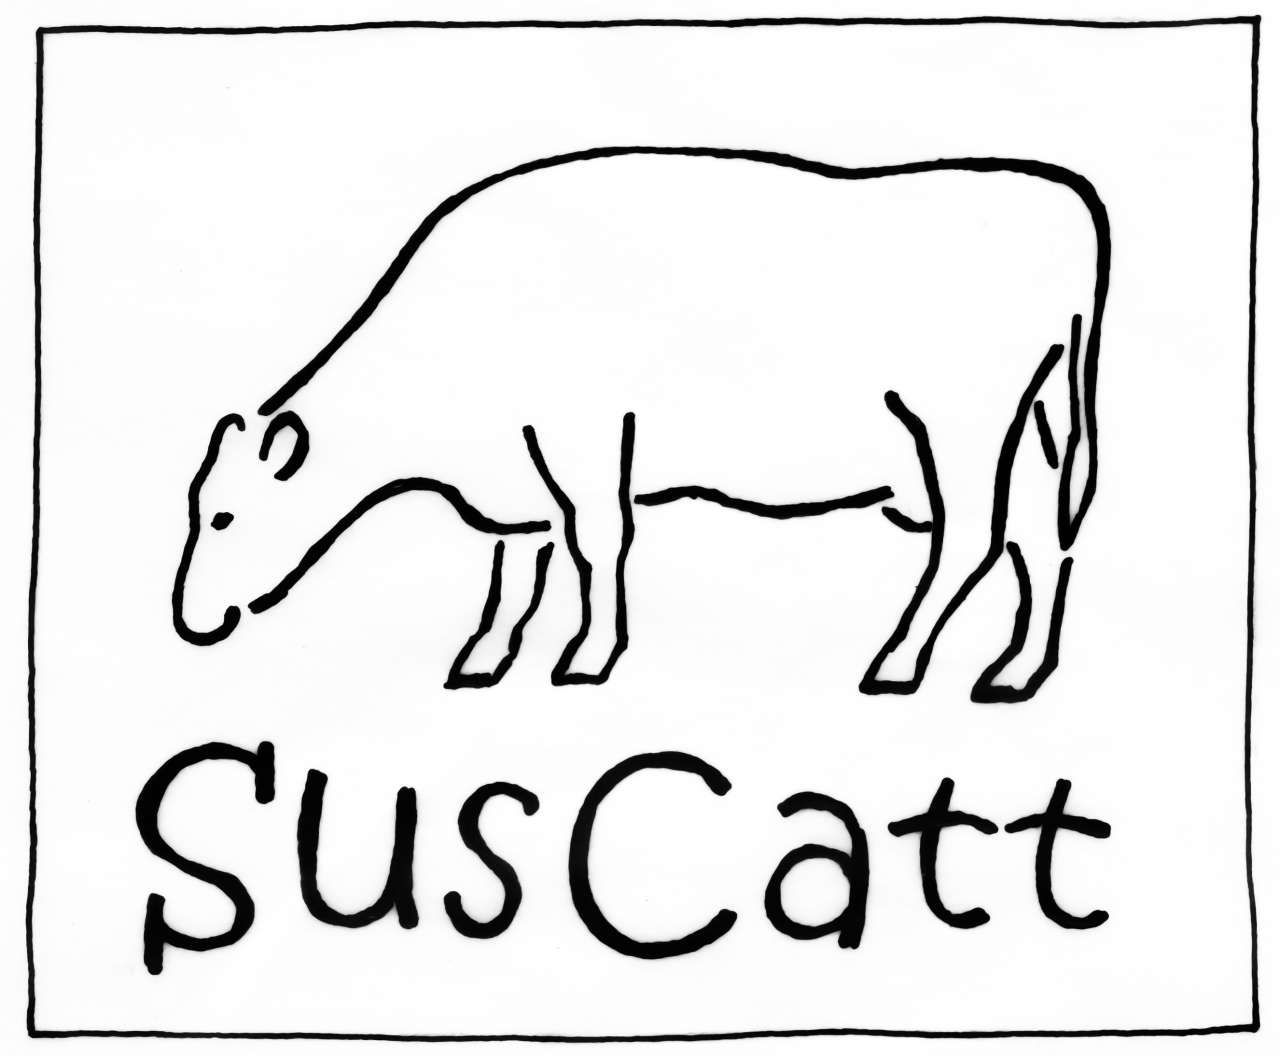 SussCat logo-1